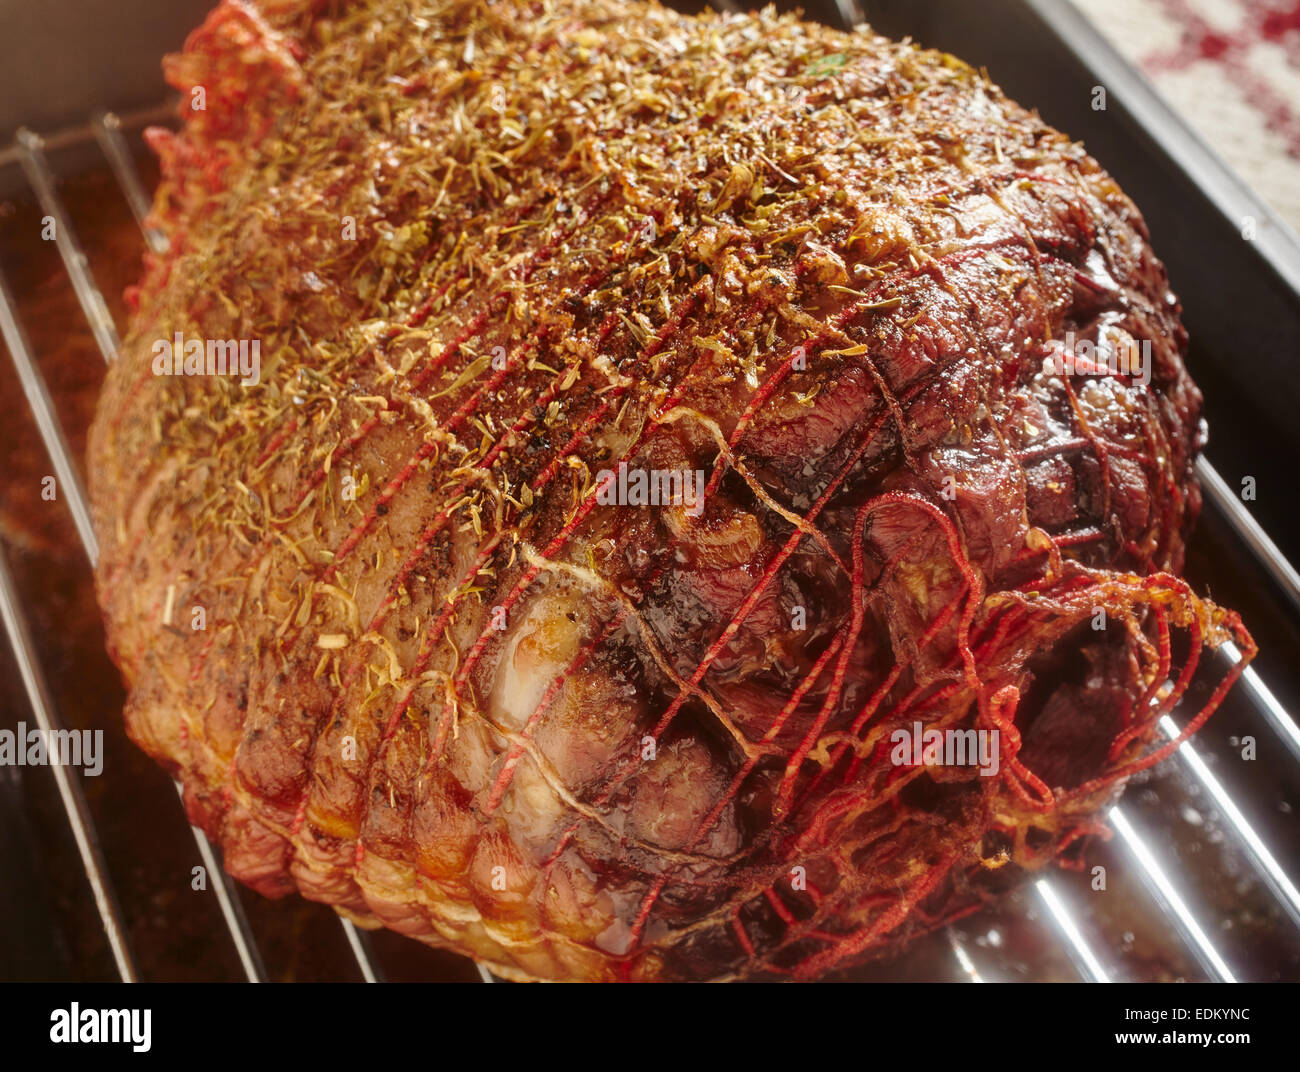 https://c8.alamy.com/comp/EDKYNC/a-roast-leg-of-lamb-with-the-bone-removed-bone-out-leg-of-lamb-the-EDKYNC.jpg